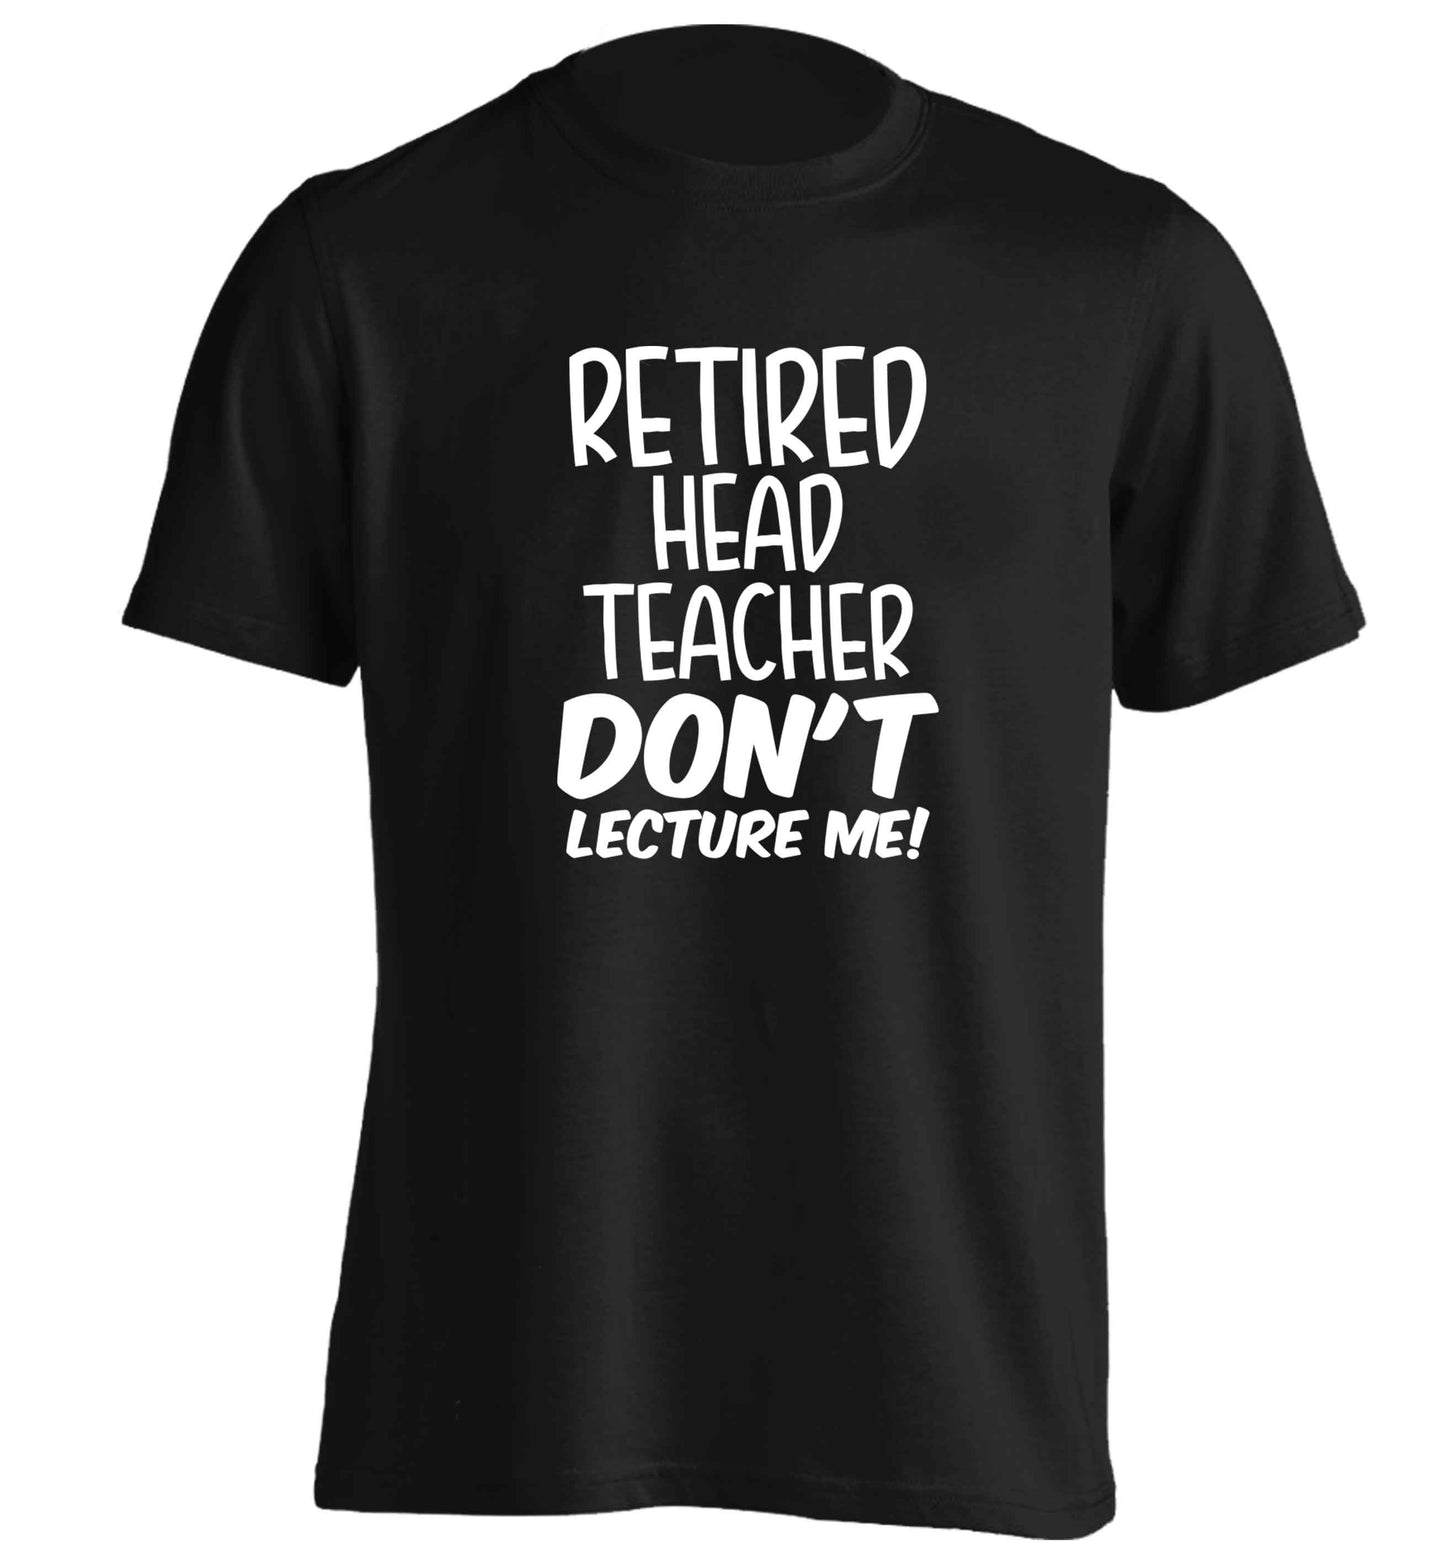 Retired head teacher don't lecture me! adults unisex black Tshirt 2XL